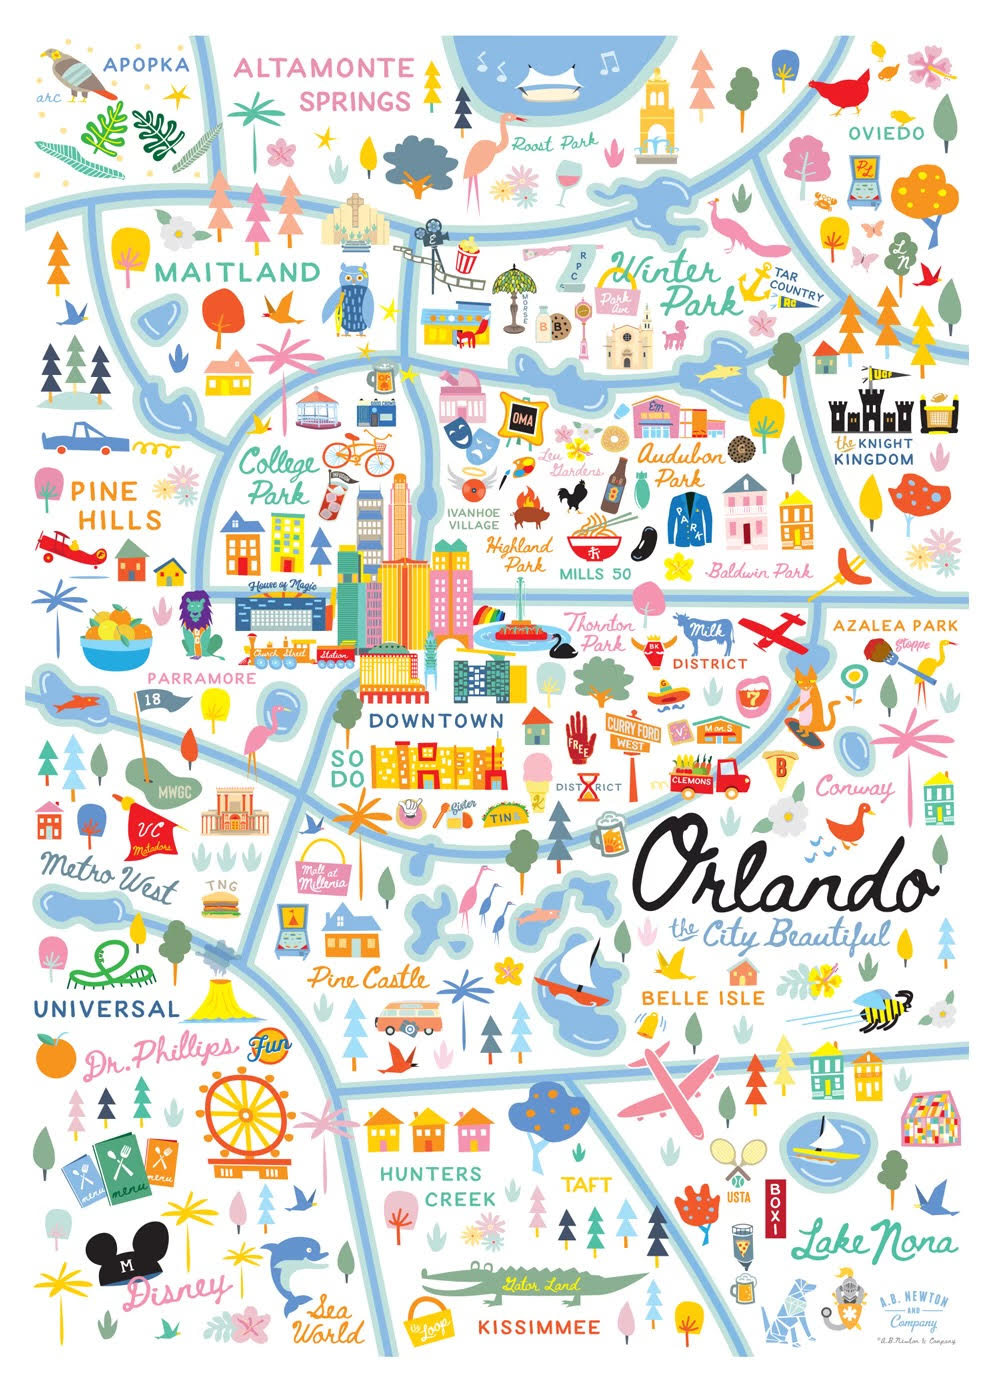 A cute map of Orlando by an artist